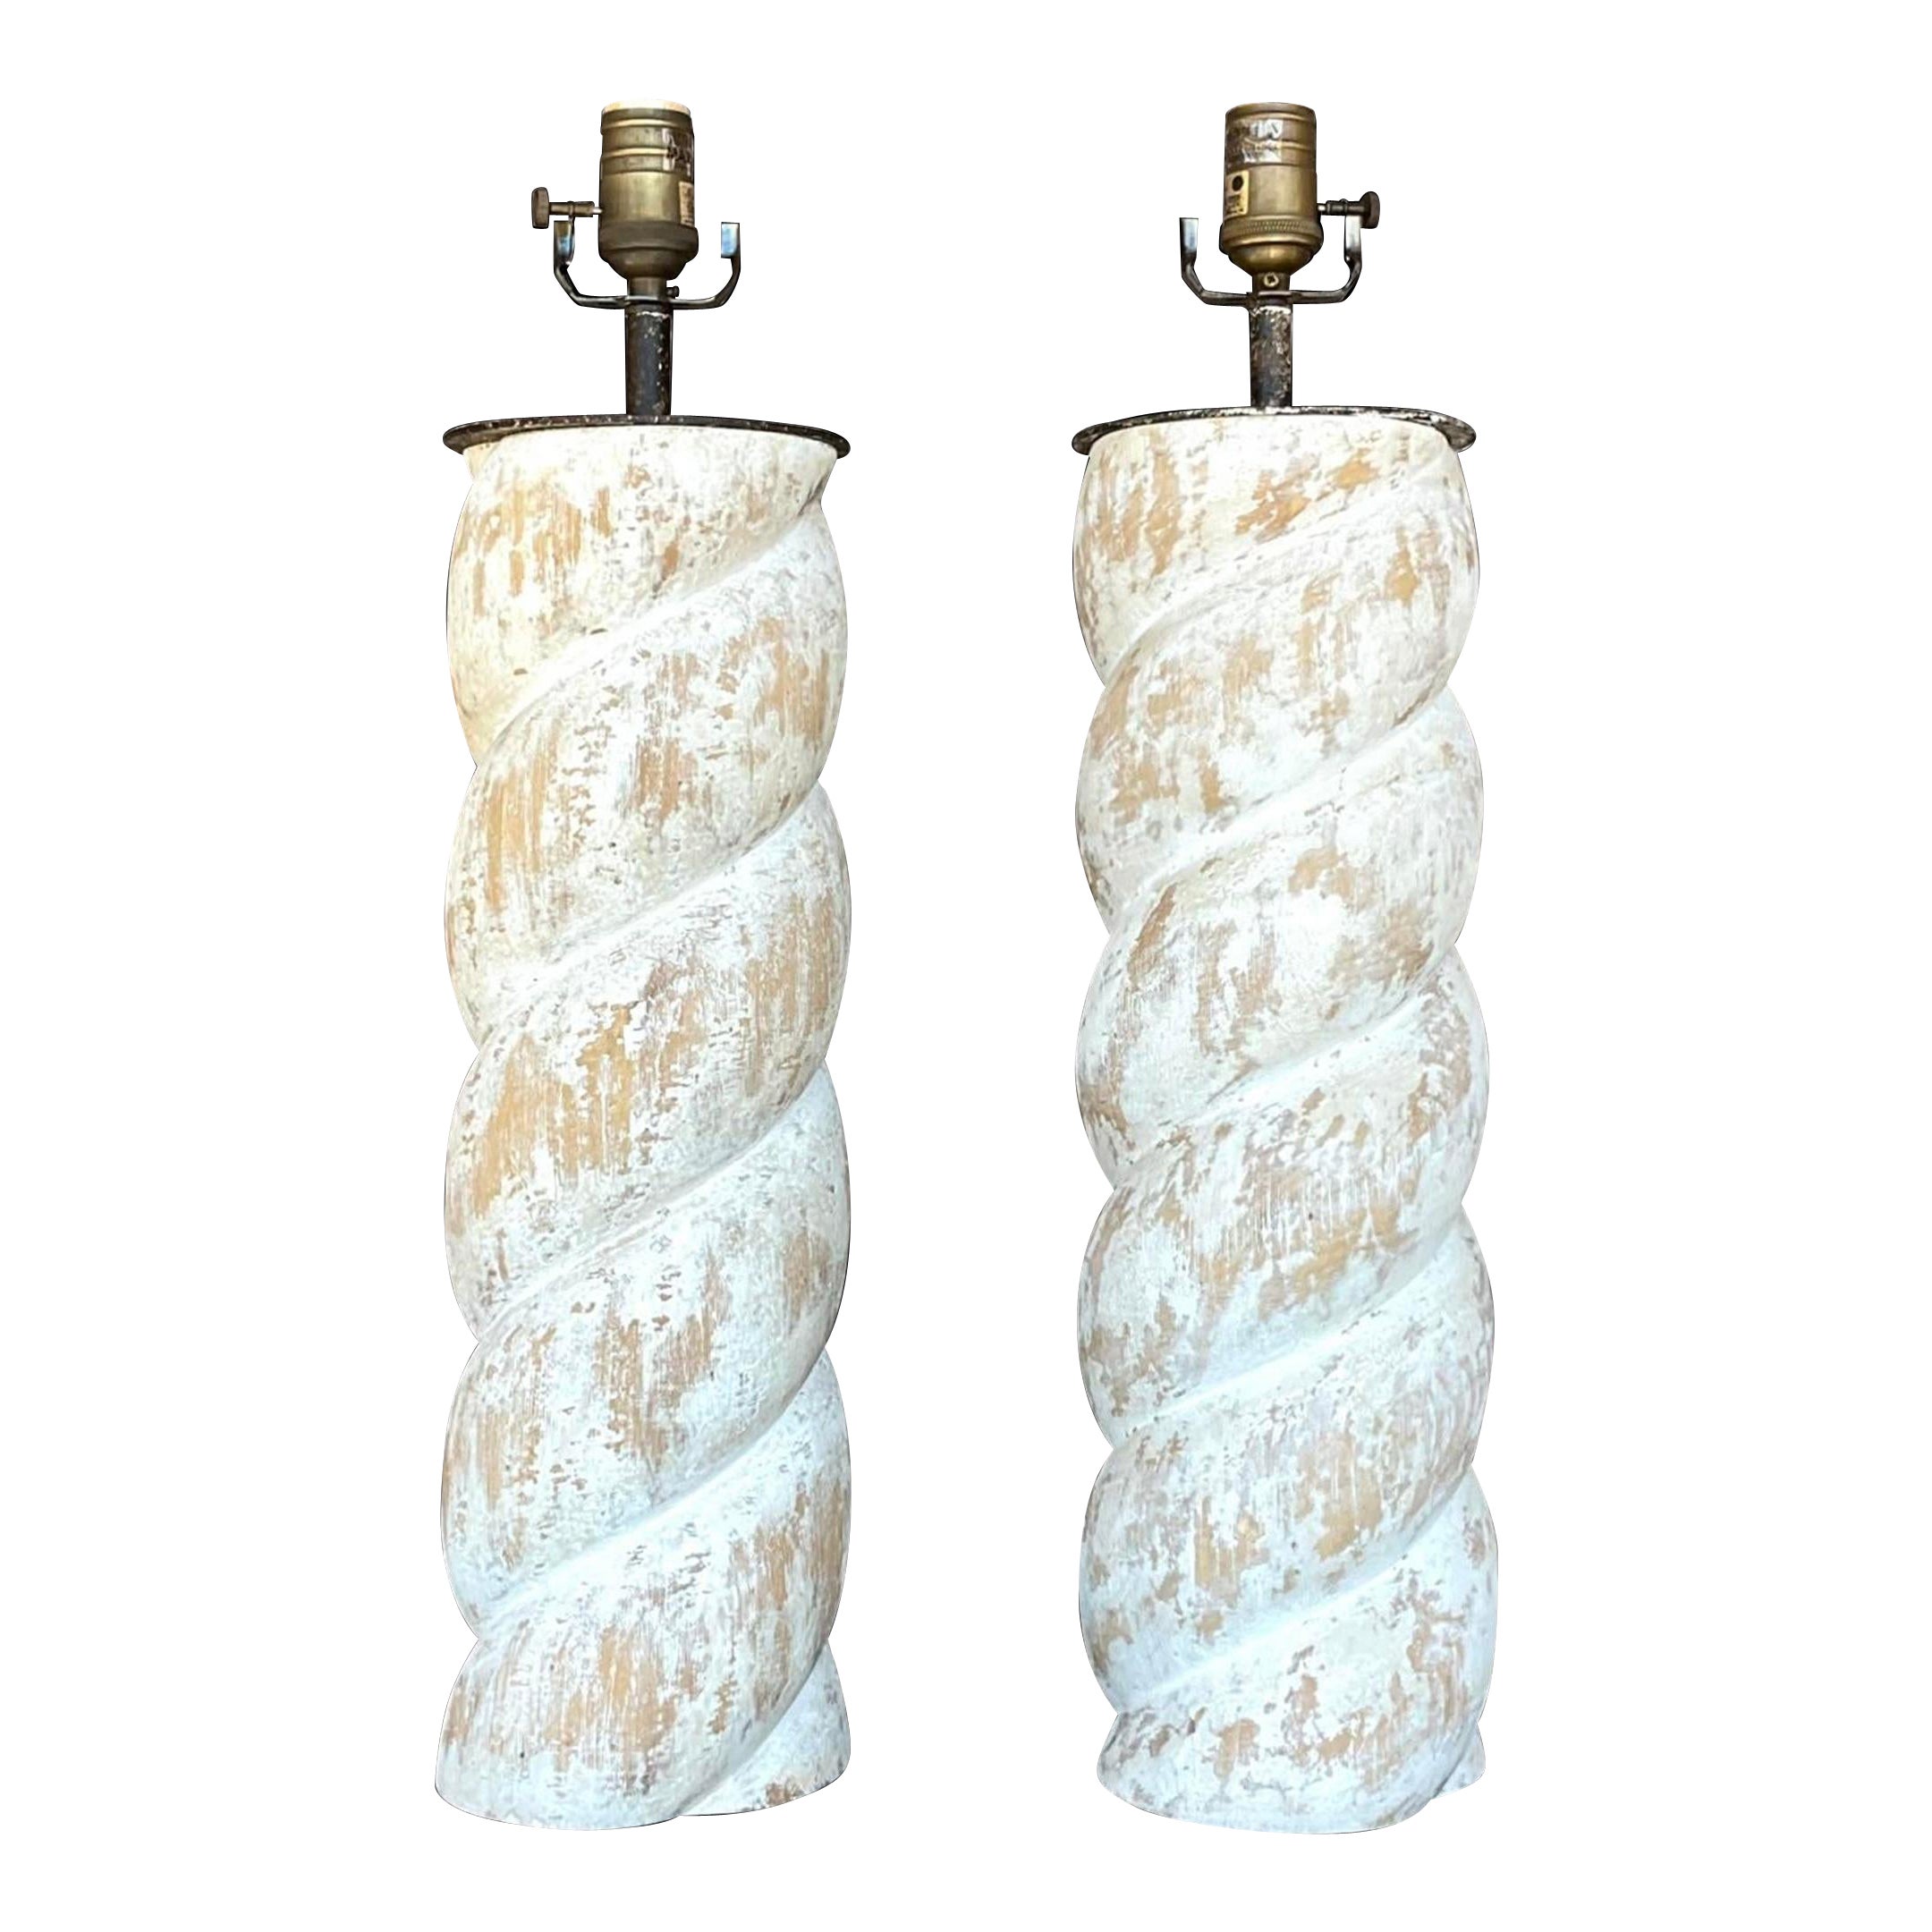 Vintage Boho Whitewashed Twist Column Lamps - a Pair